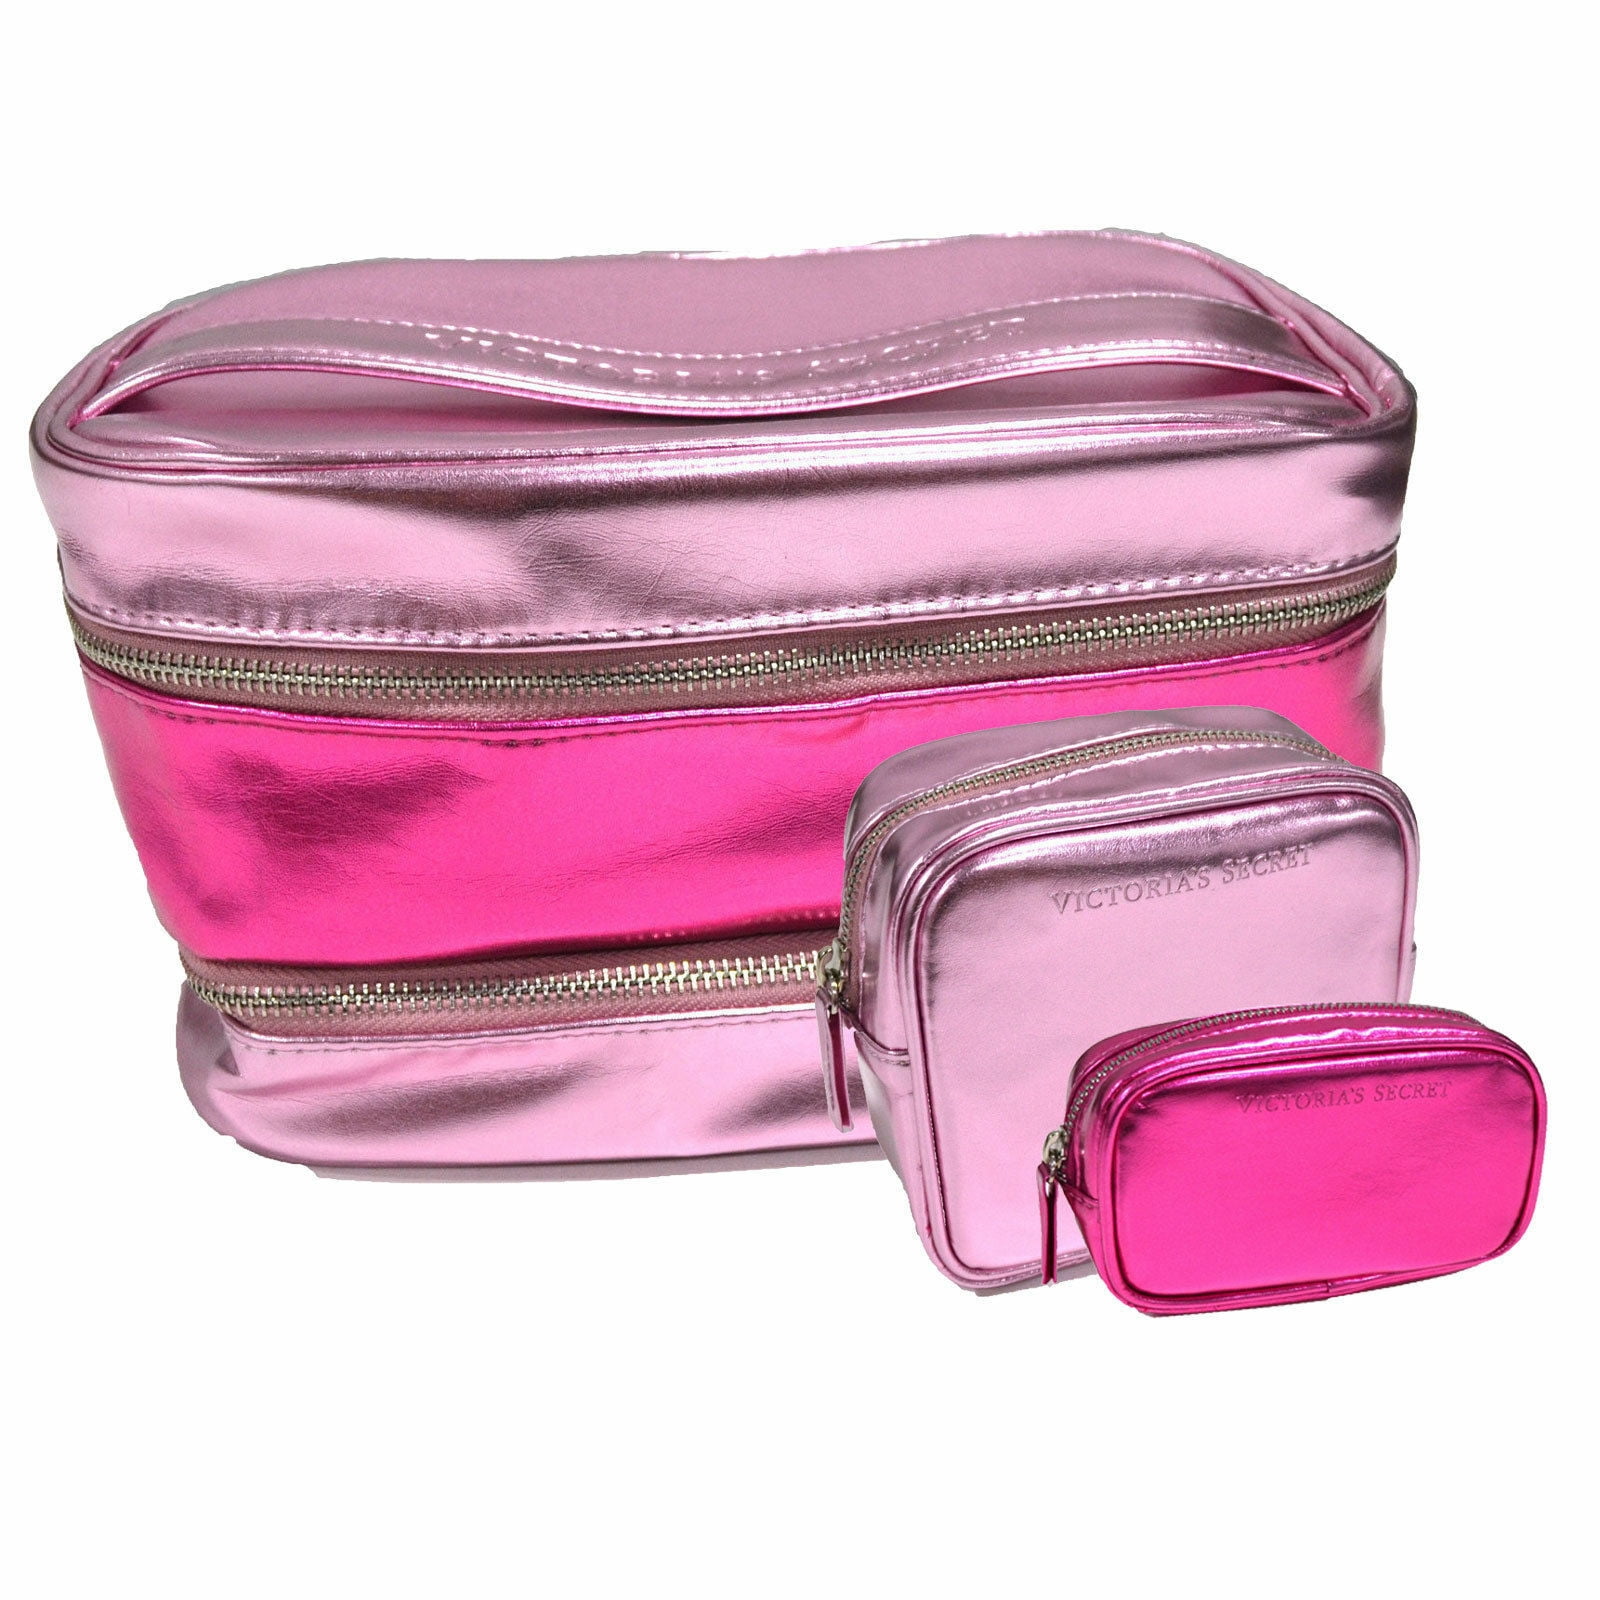 pink travel bag victoria secret